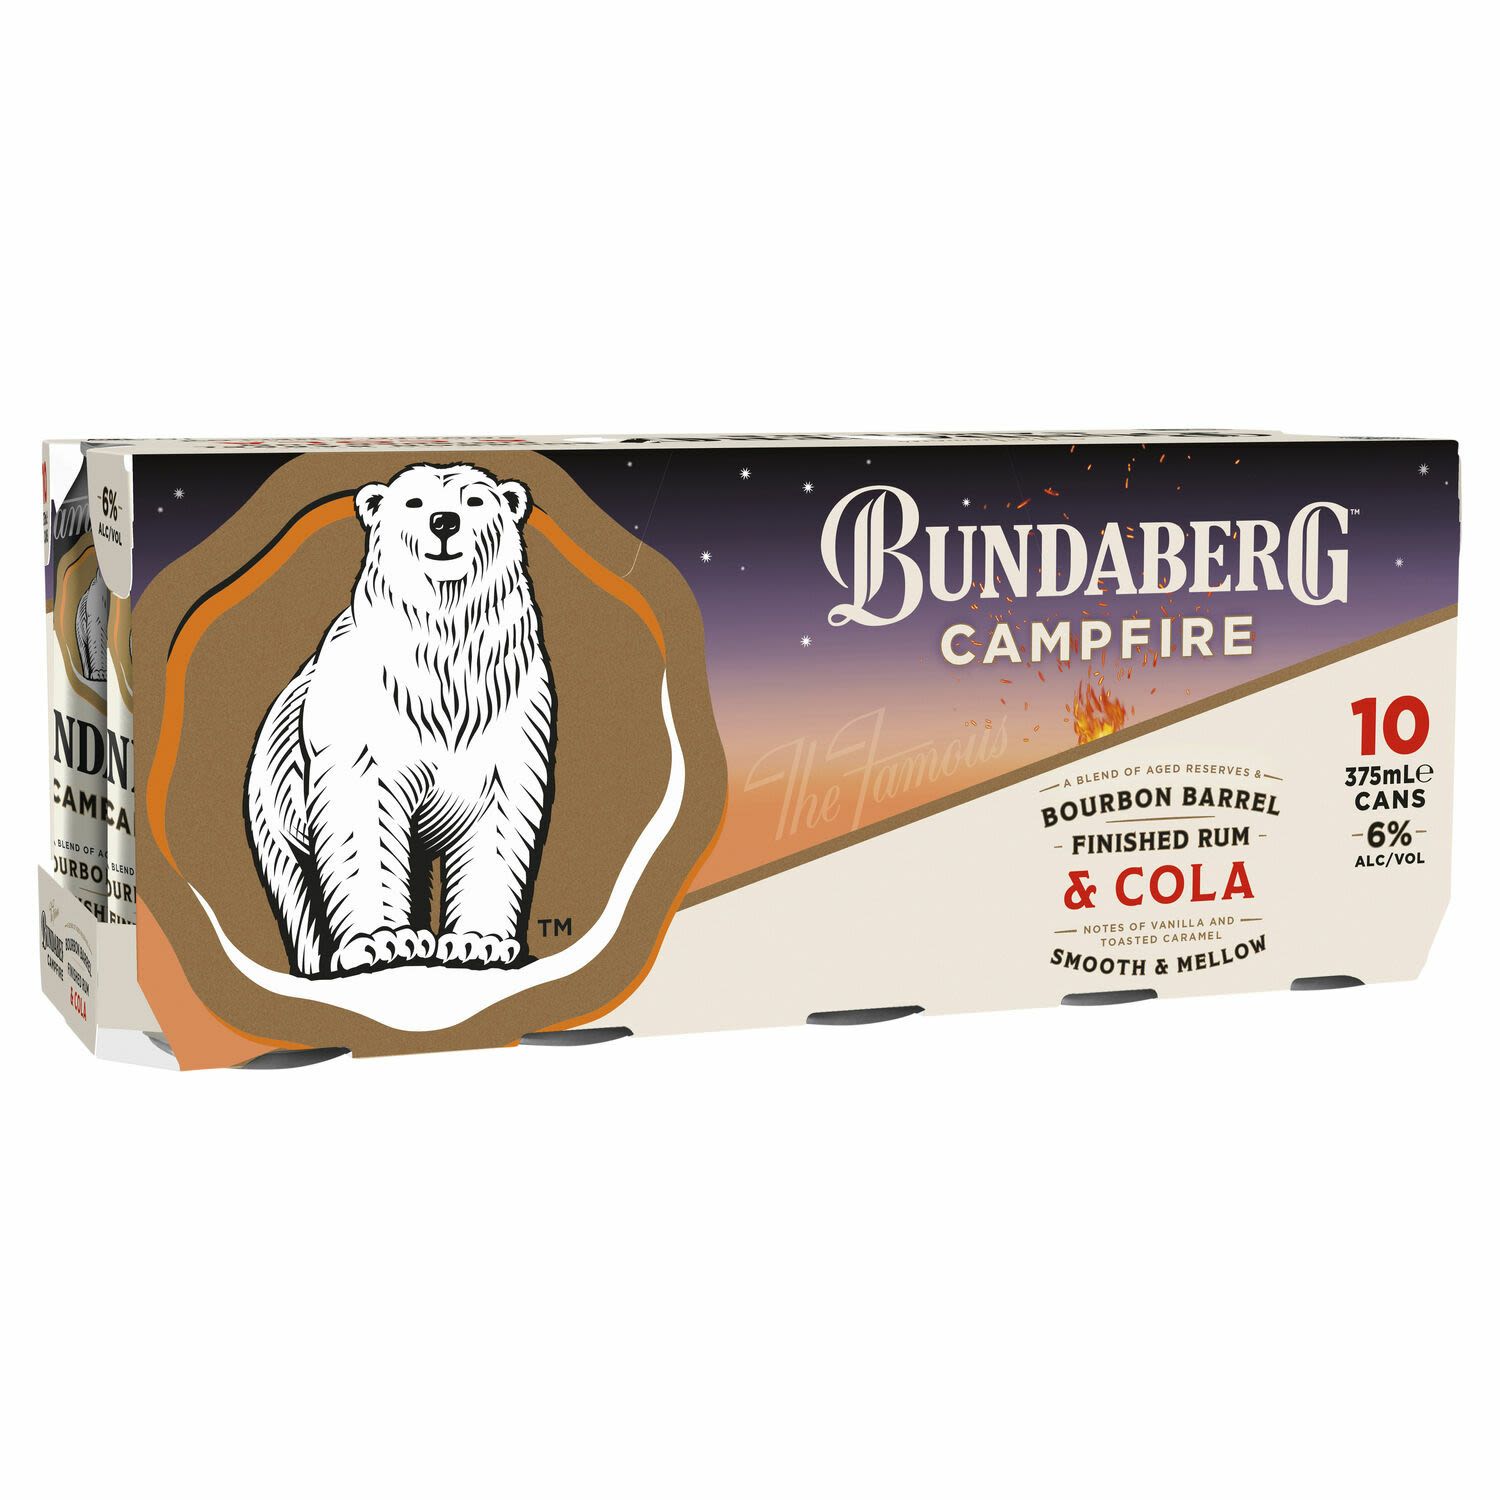 Bundaberg Campfire Rum & Cola 6% Can 375mL 10 Pack